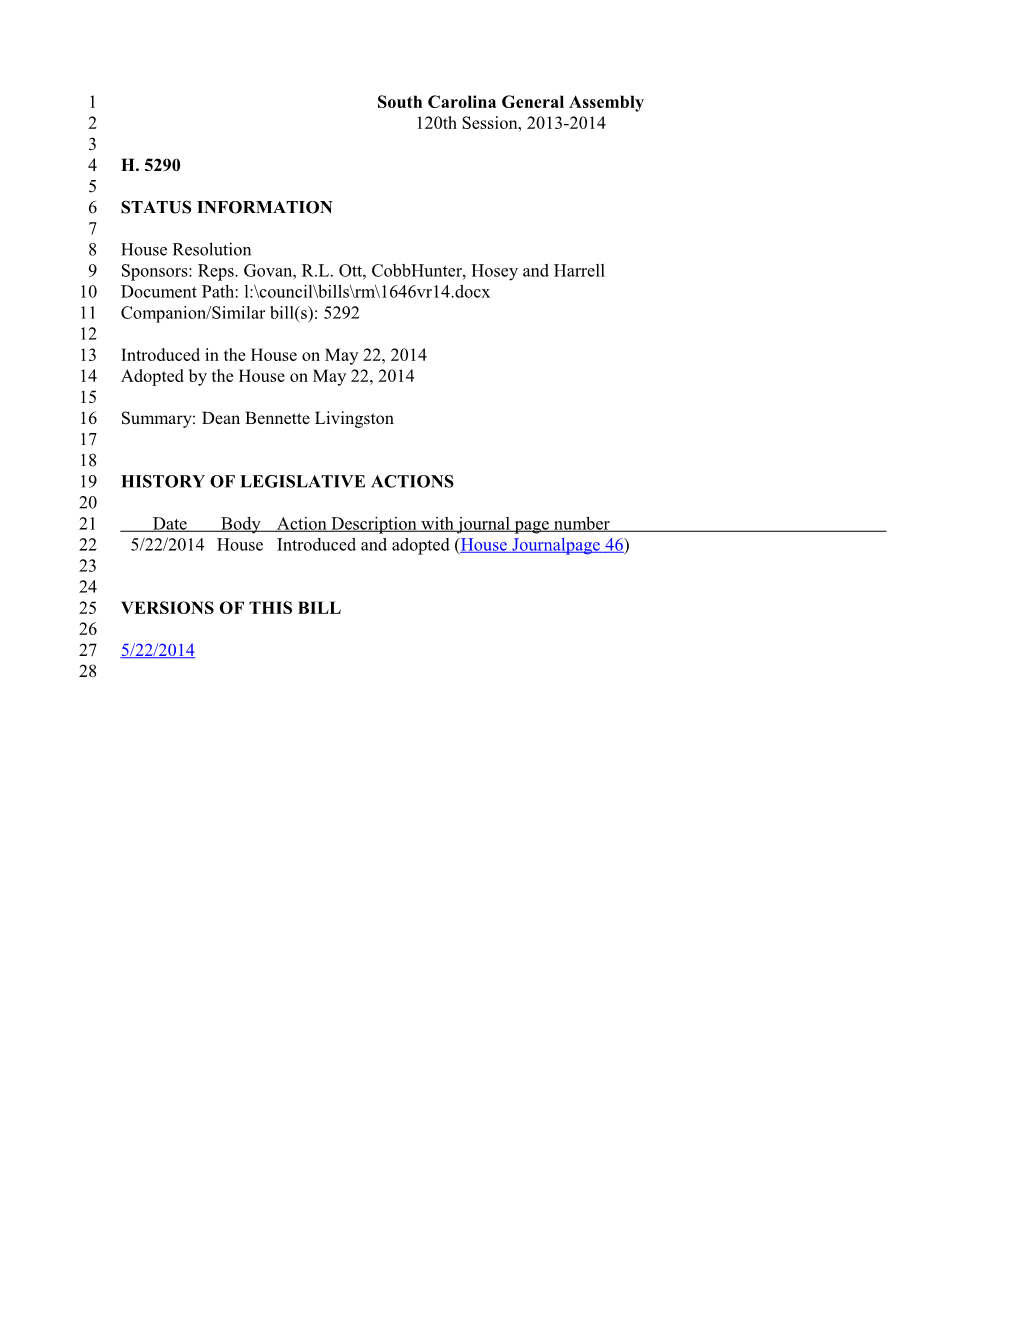 2013-2014 Bill 5290: Dean Bennette Livingston - South Carolina Legislature Online